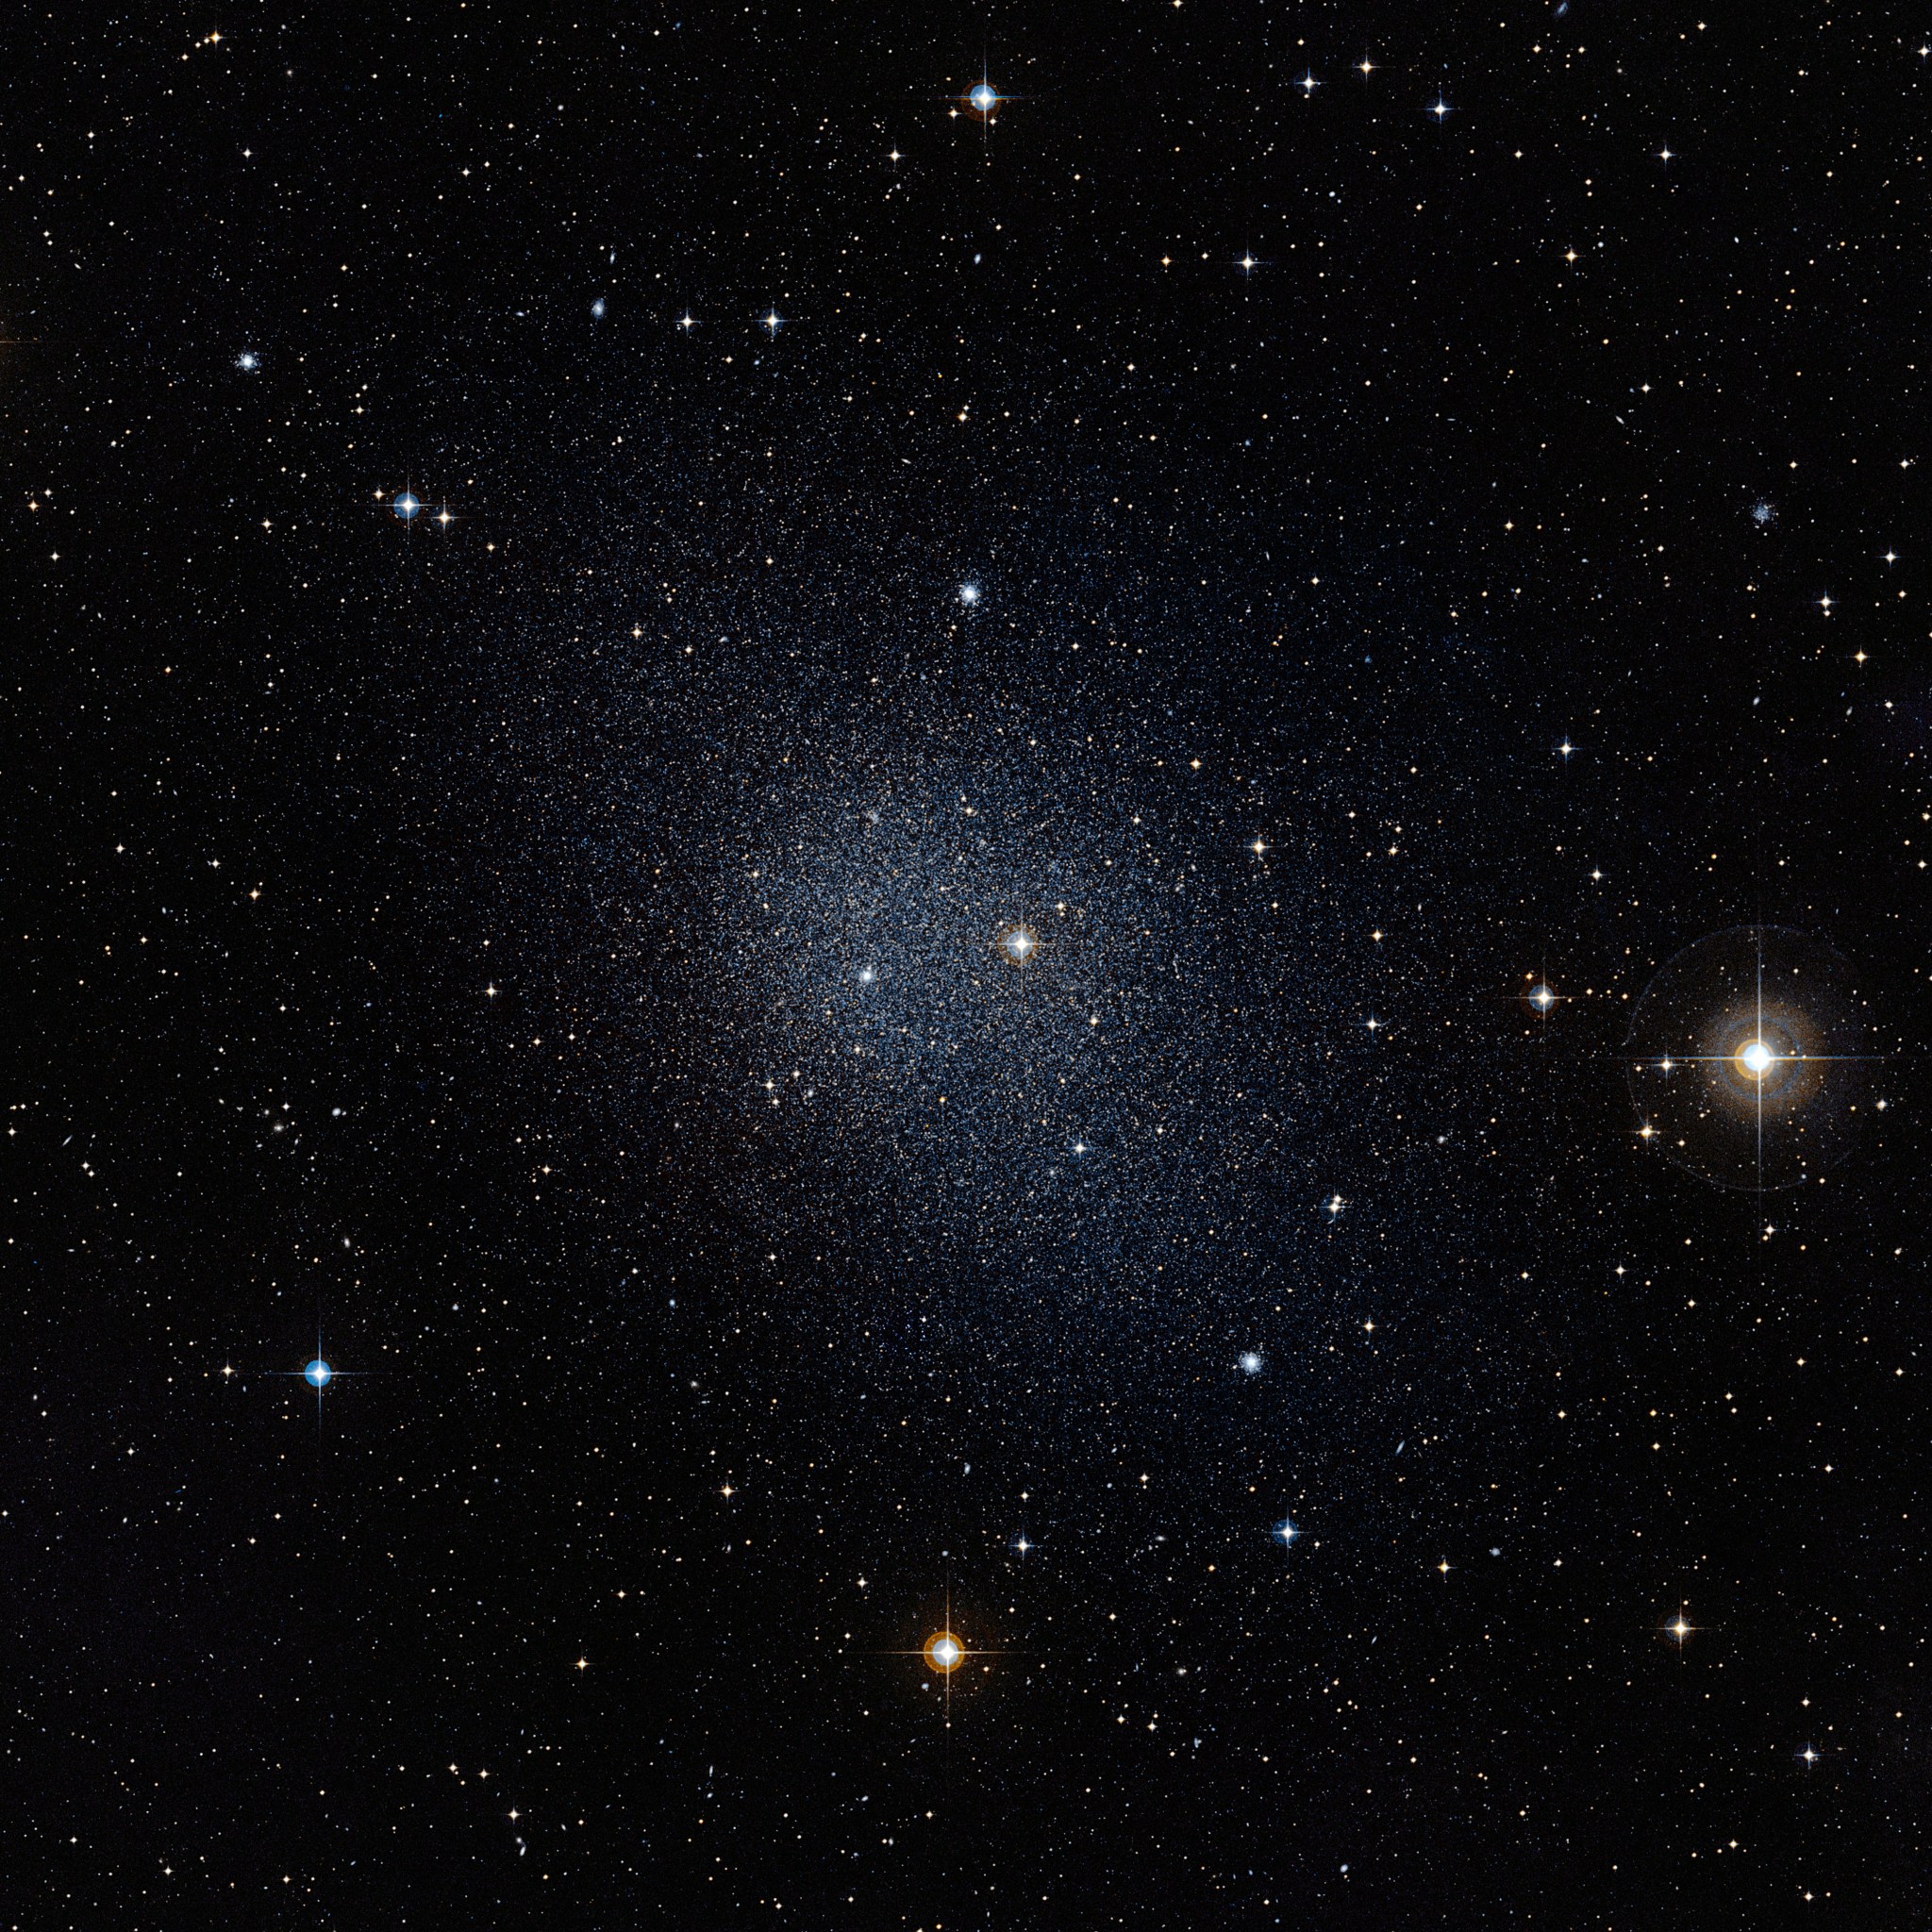 dwarf spheroidal galaxy in the constellation Fornax